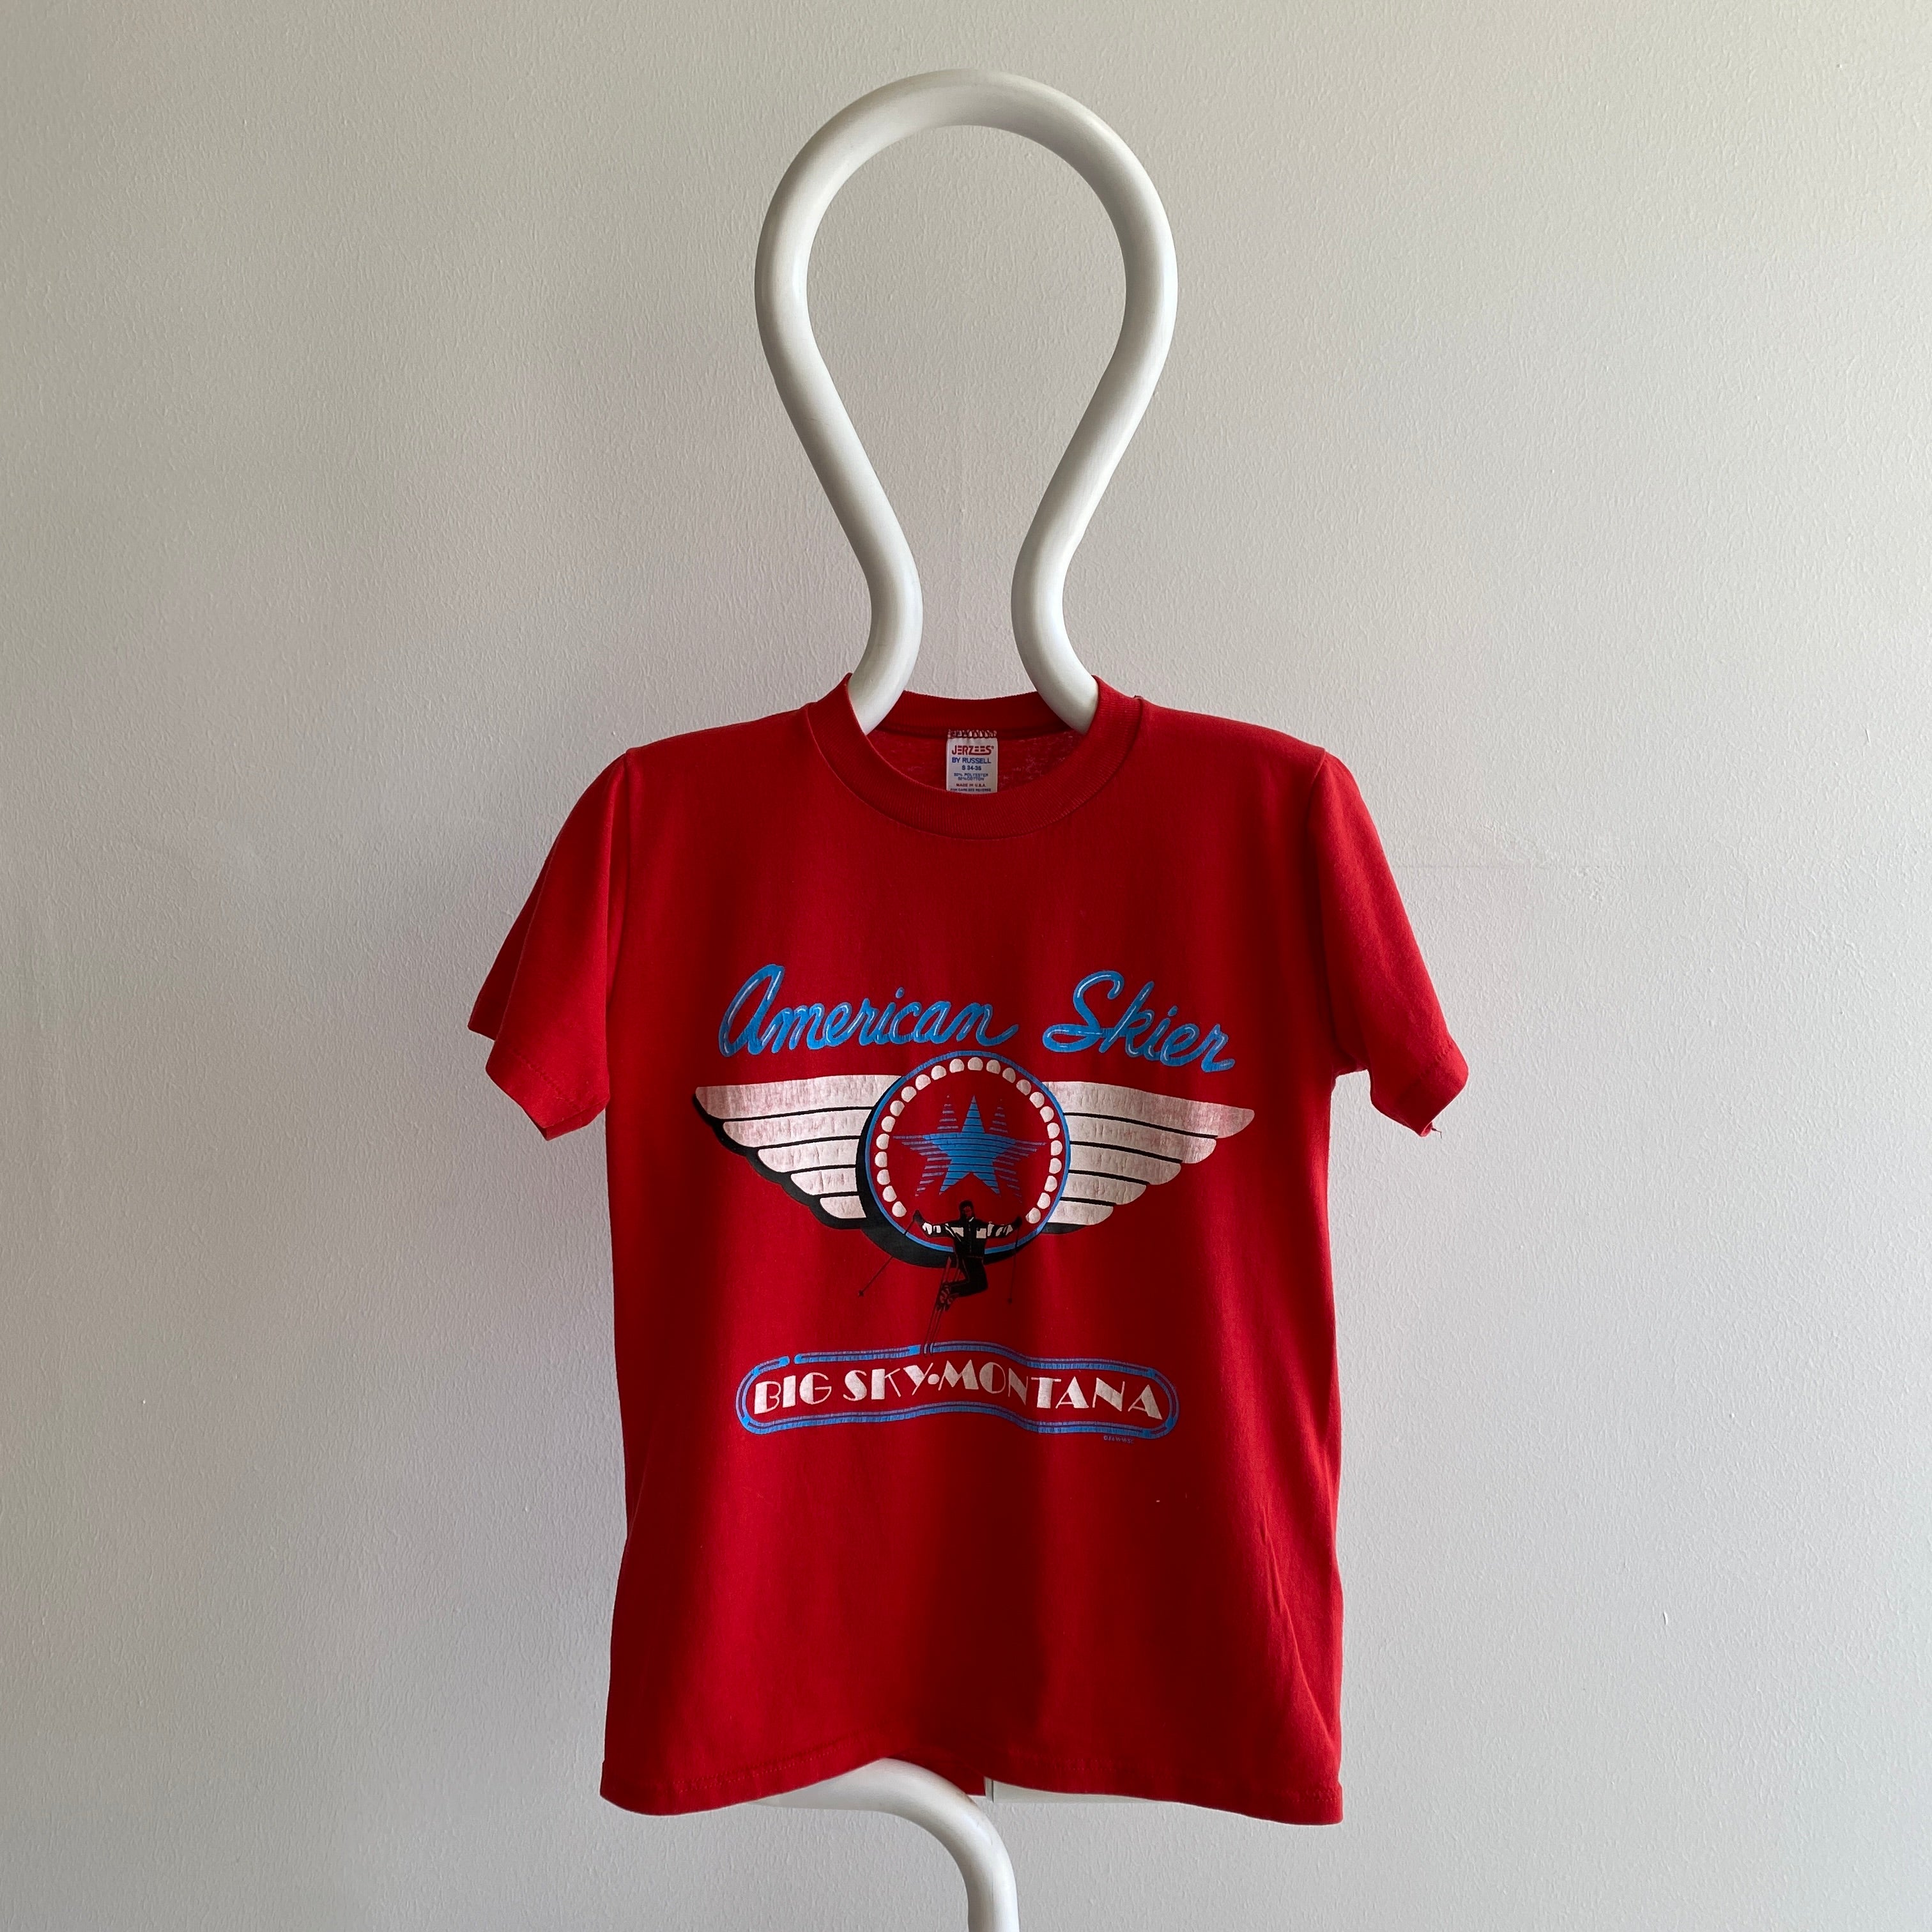 1986 Big Sky Montana Tourist Sky T-Shirt by Jerzees/Russell